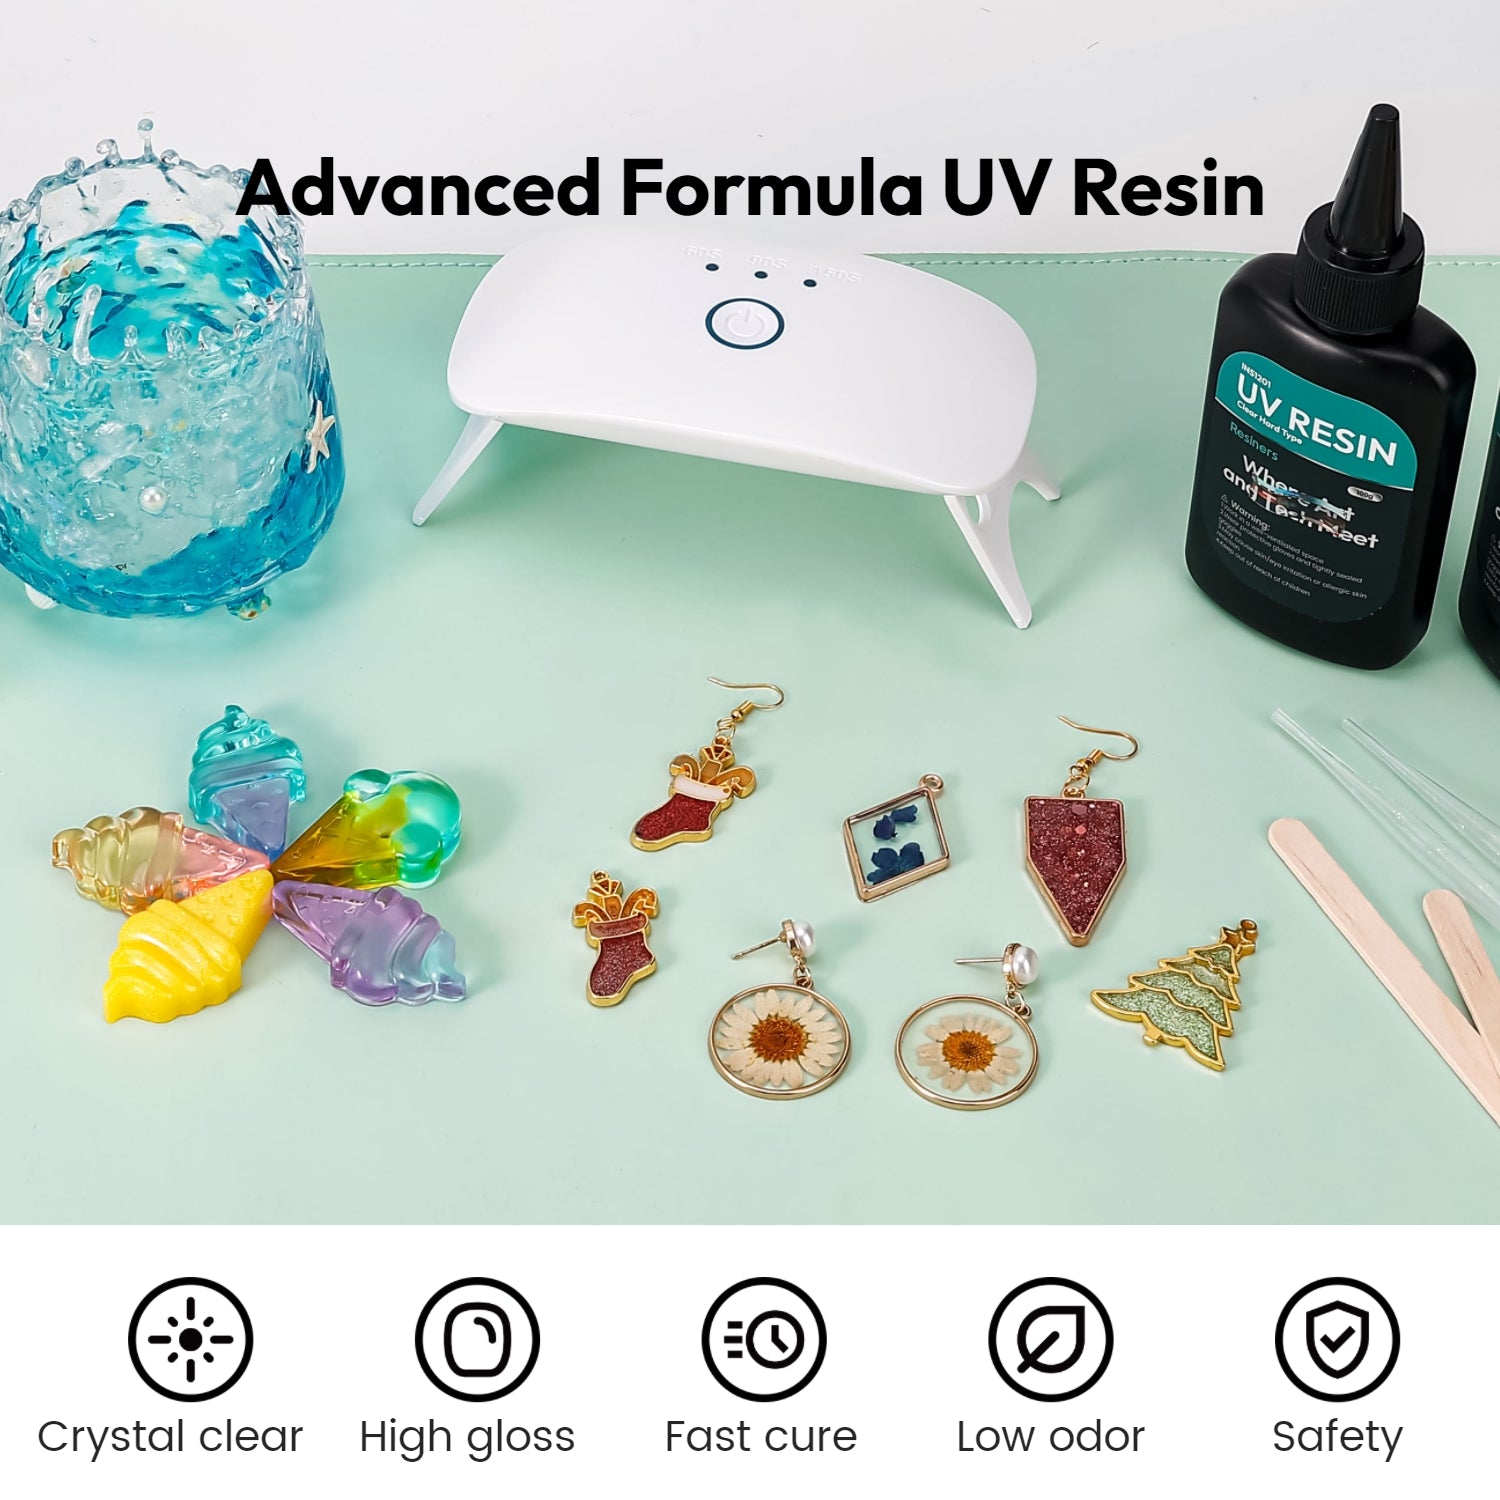 Resiners® 32PCS UV Resin Kit with Light